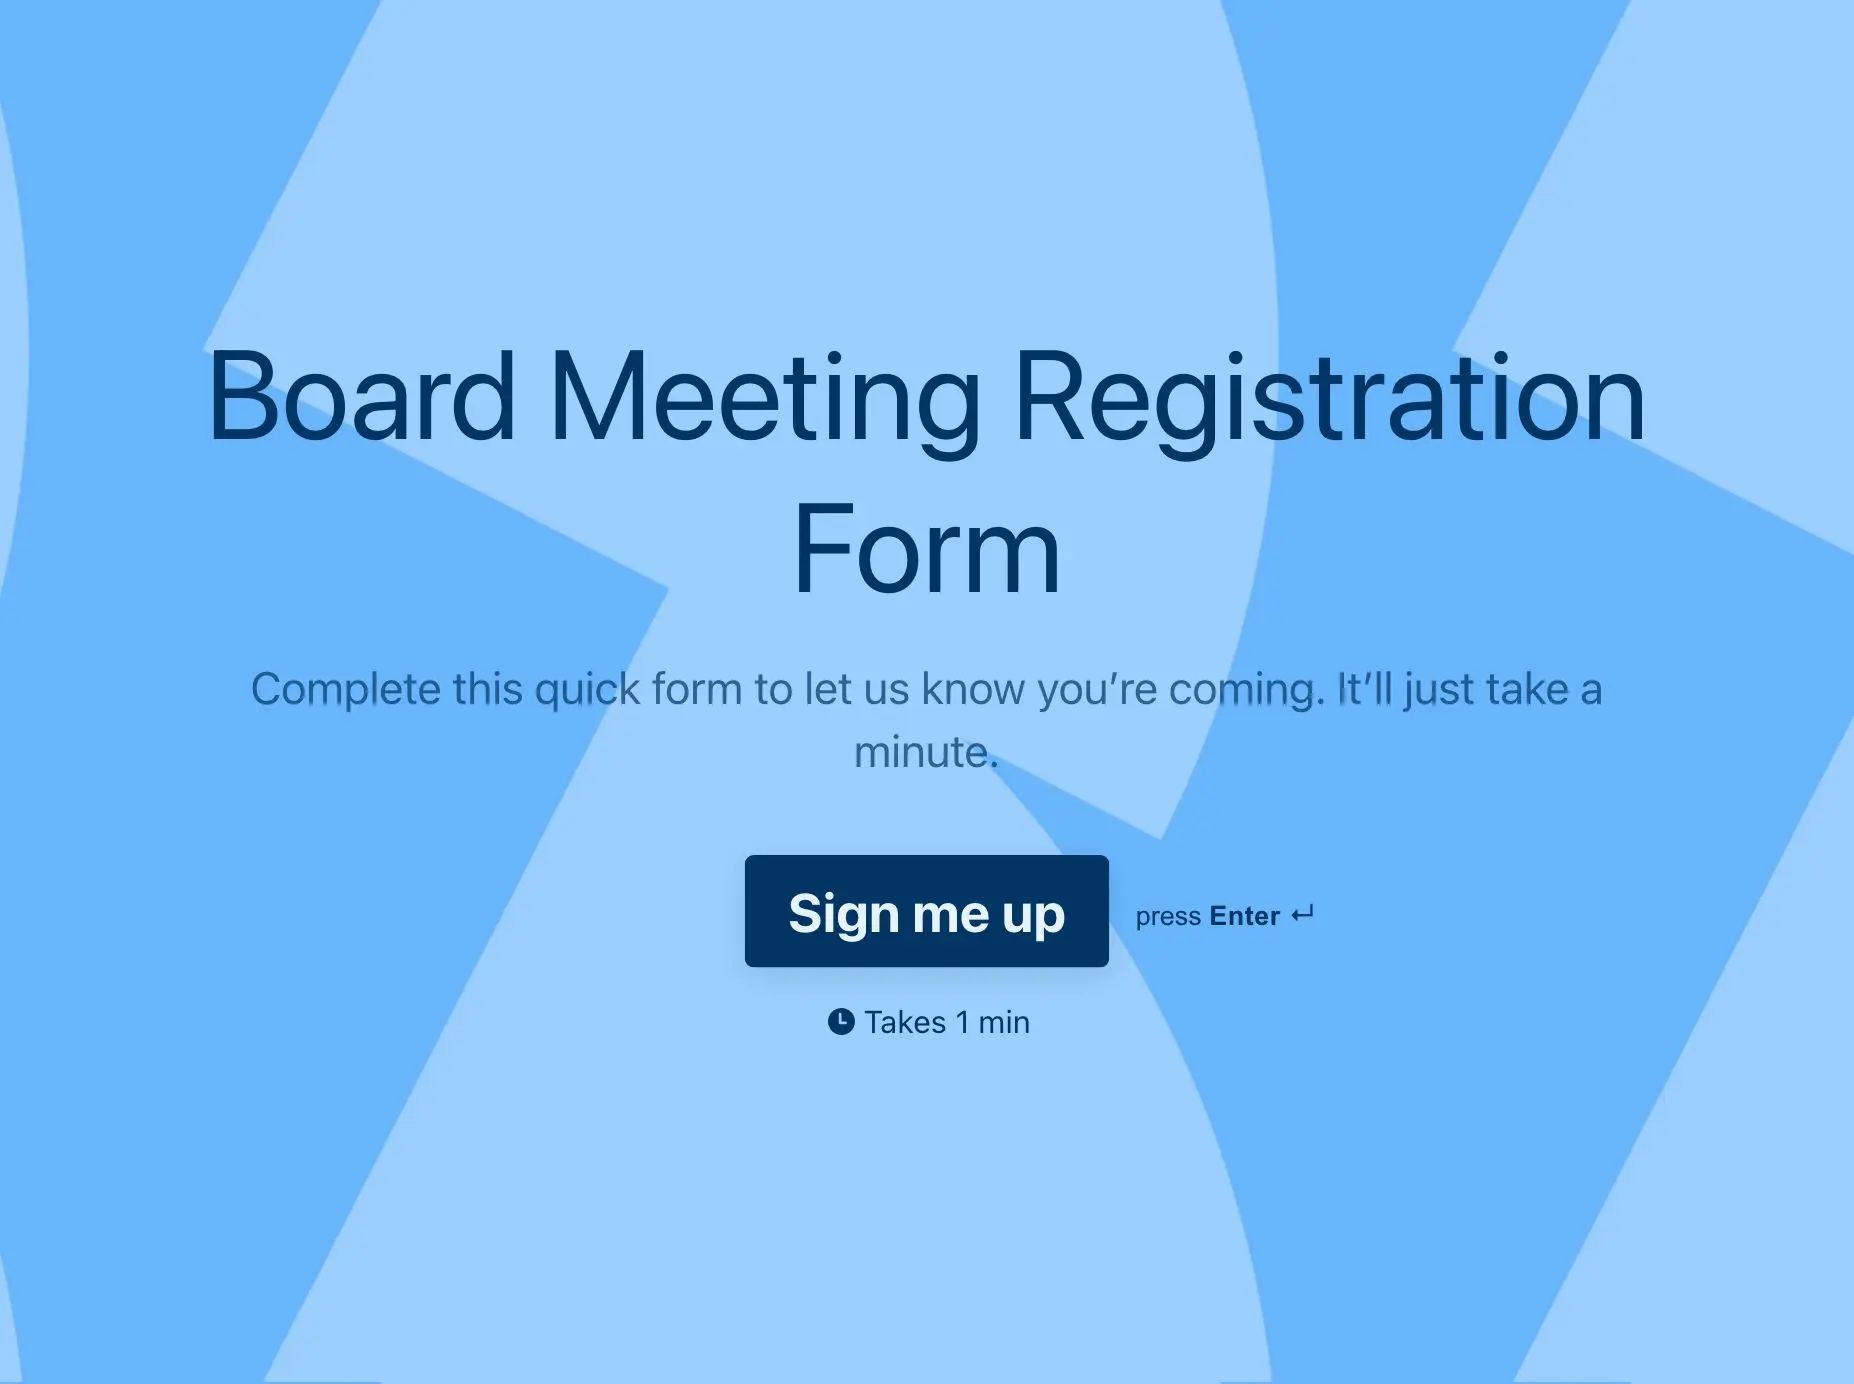 Board Meeting Registration Form Template Hero